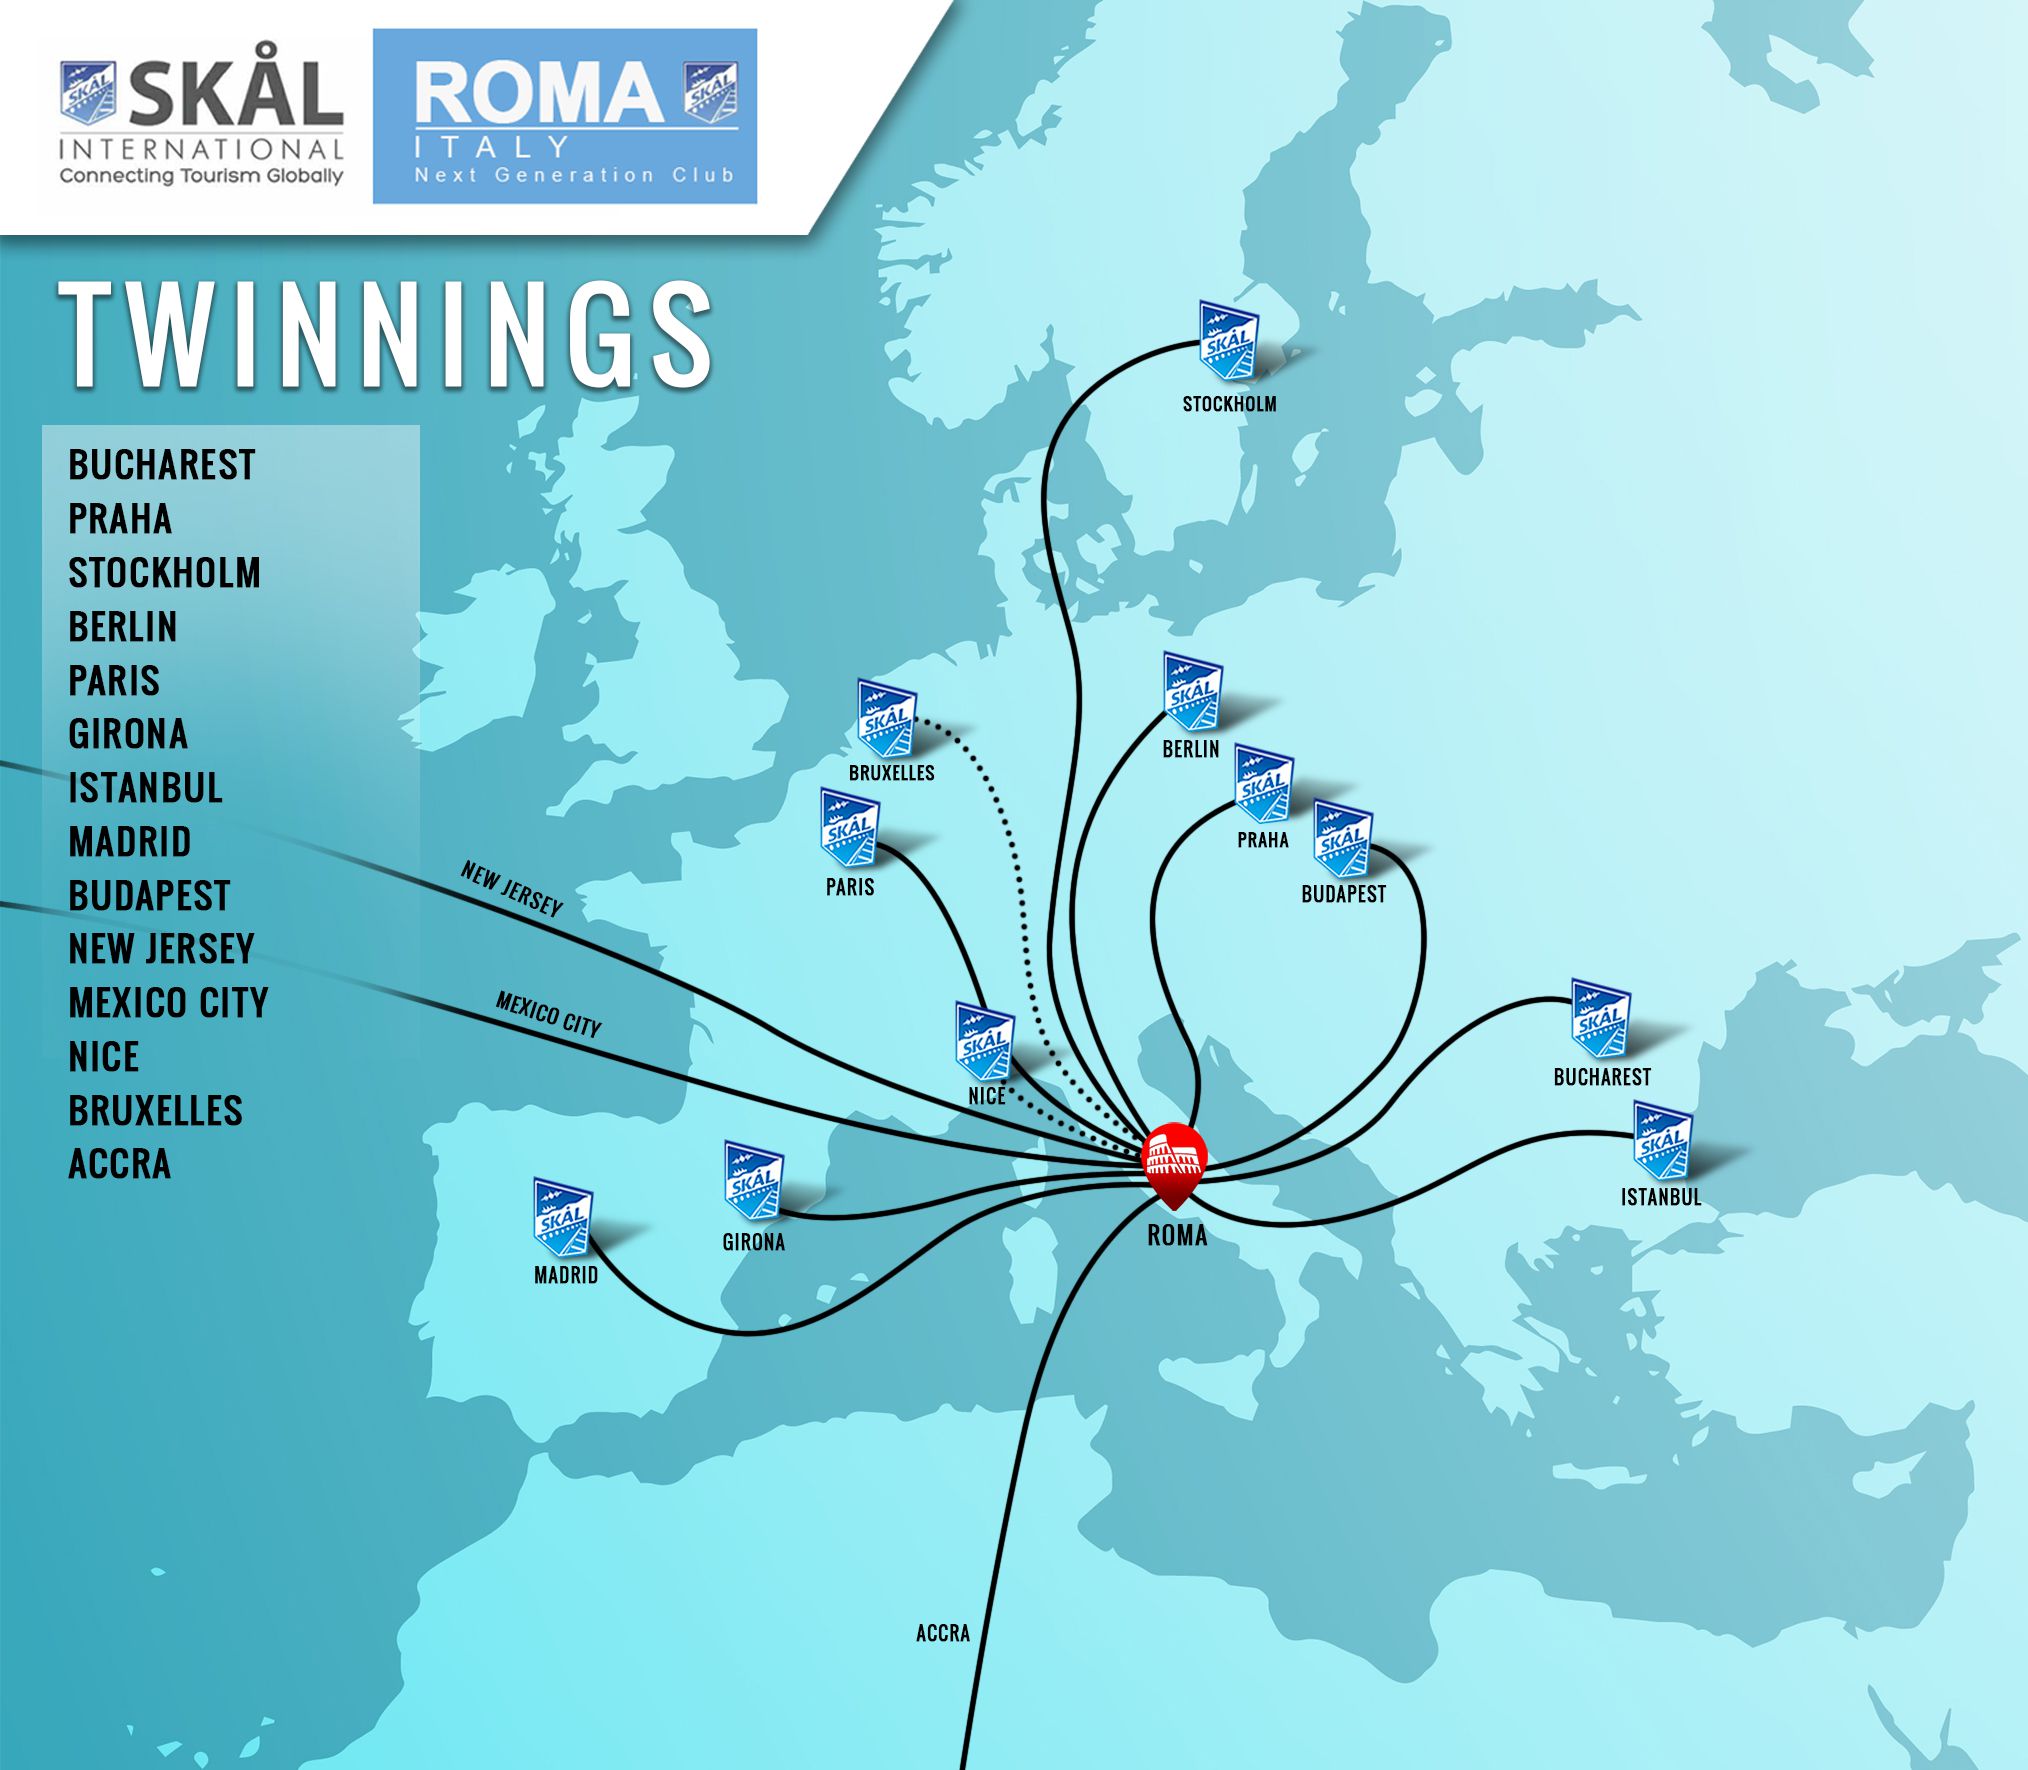 Twinnings of Skål International Roma